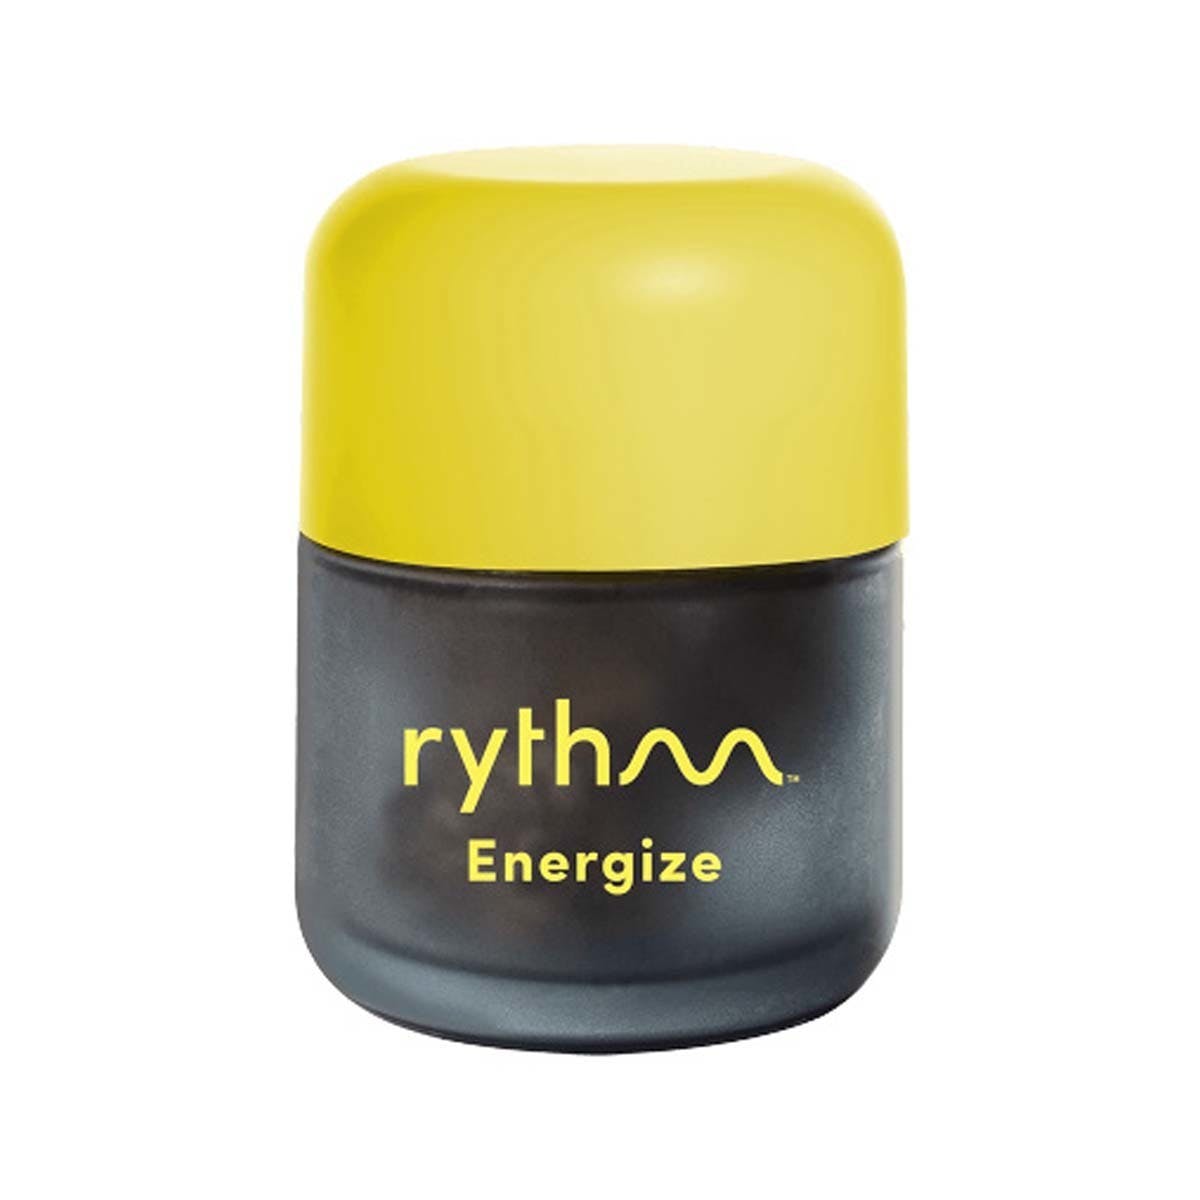 RYTHM Reserve Energize - Jack Herer